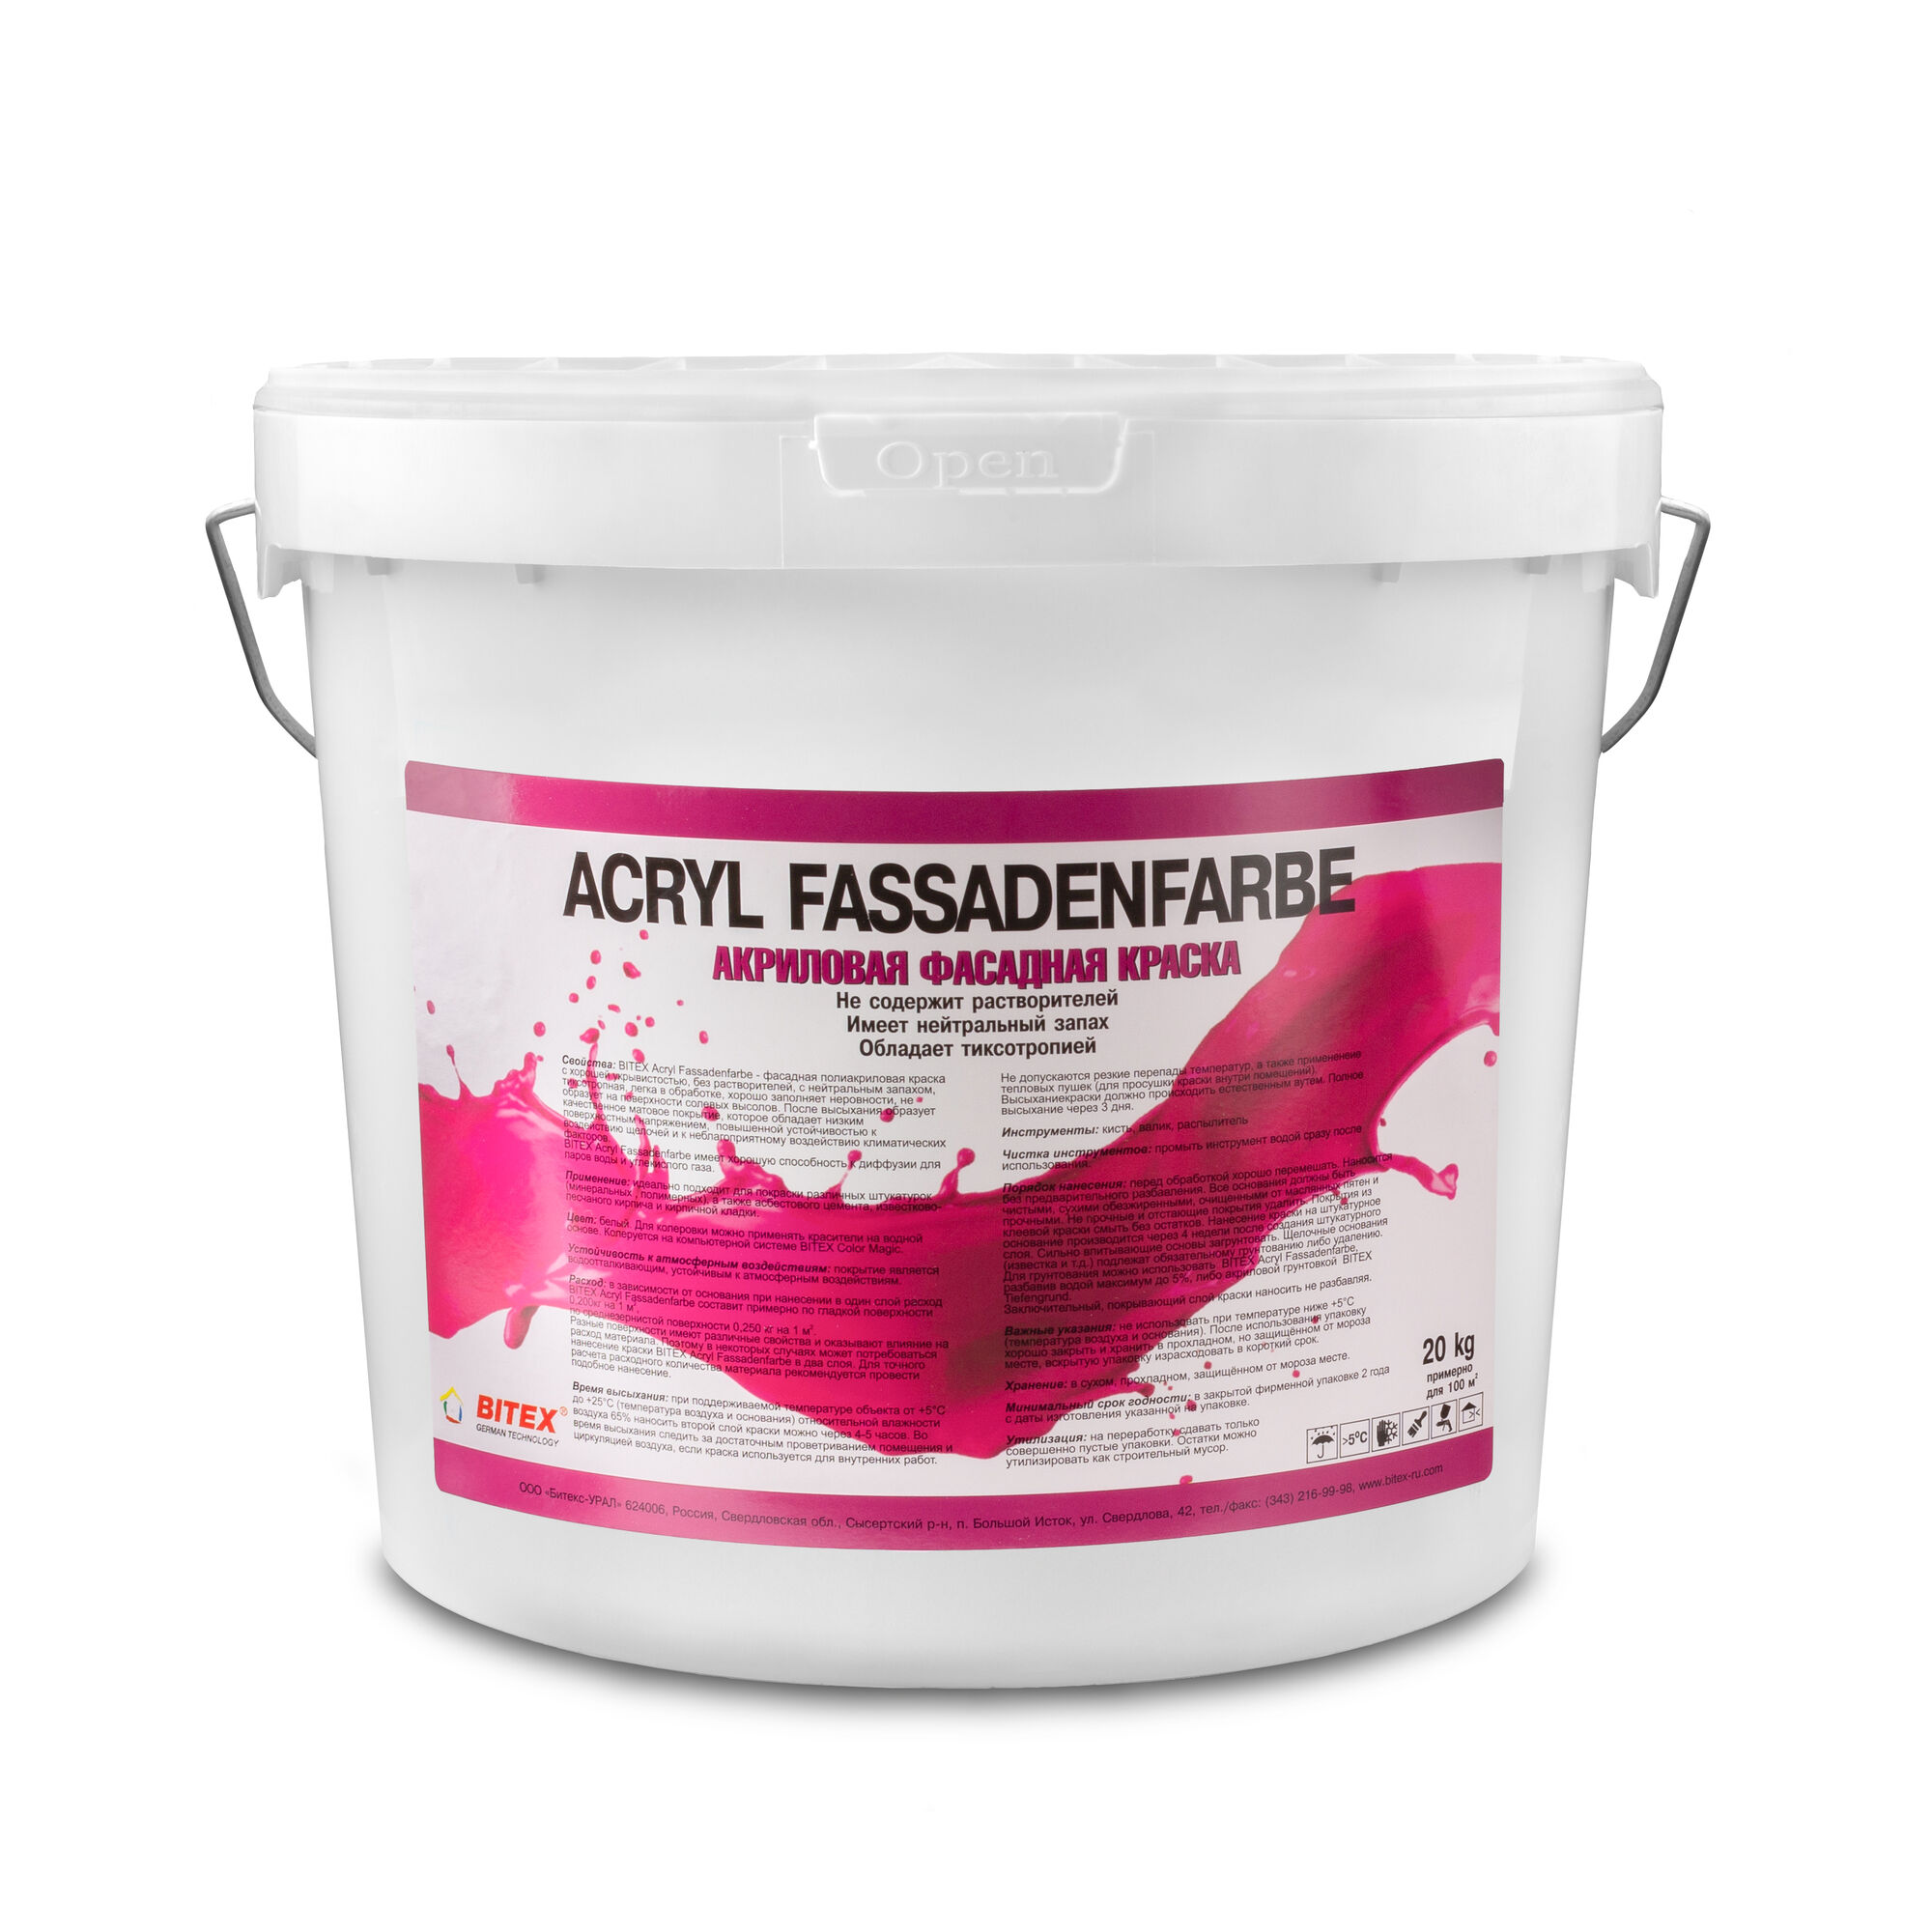 Краска Bitex Acryl Fassadenfarbe Base 1 20 кг, расход 0,2 кг/м2 в 1 сл